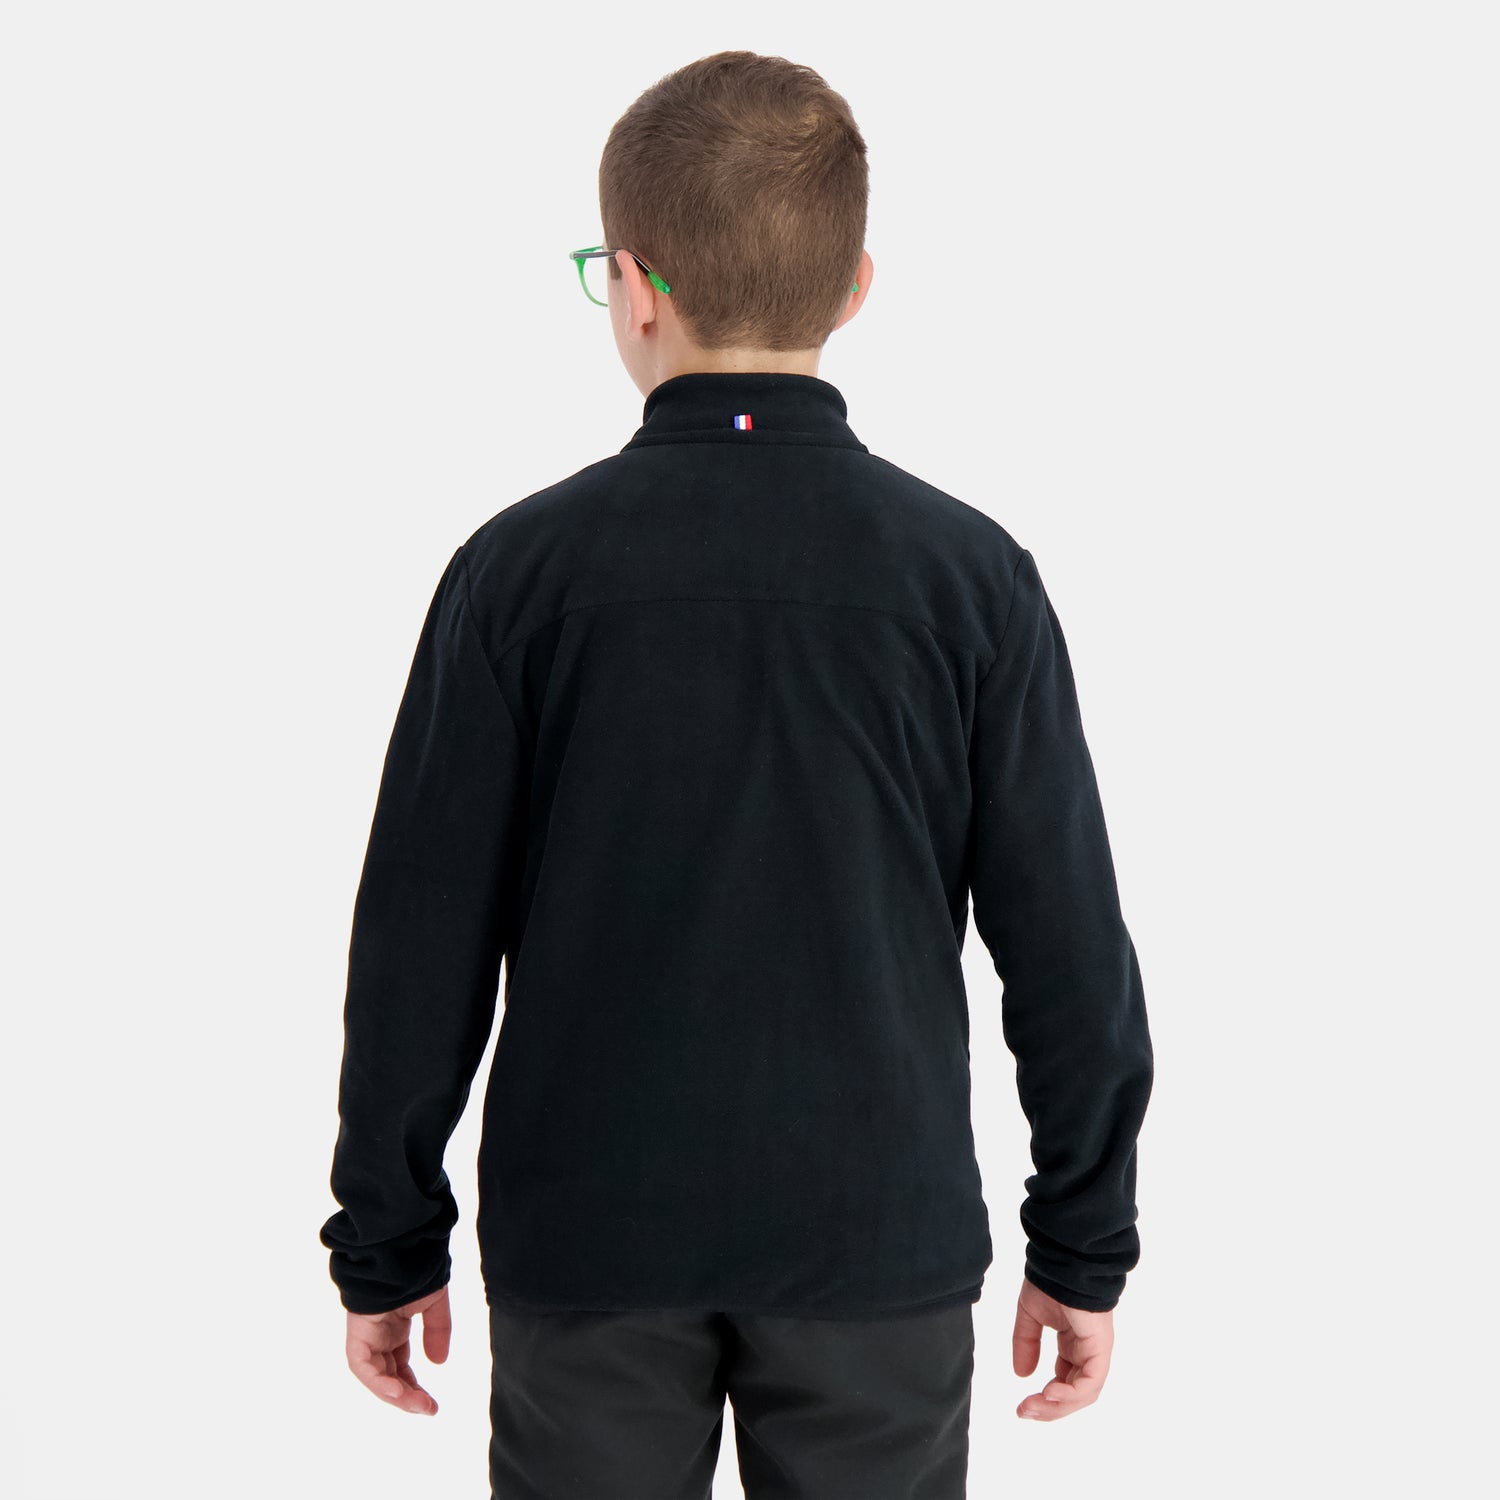 2410690-SAISON 1 FZ Sweat N°1 Enfant black/scara  | Sweatshirt for kids